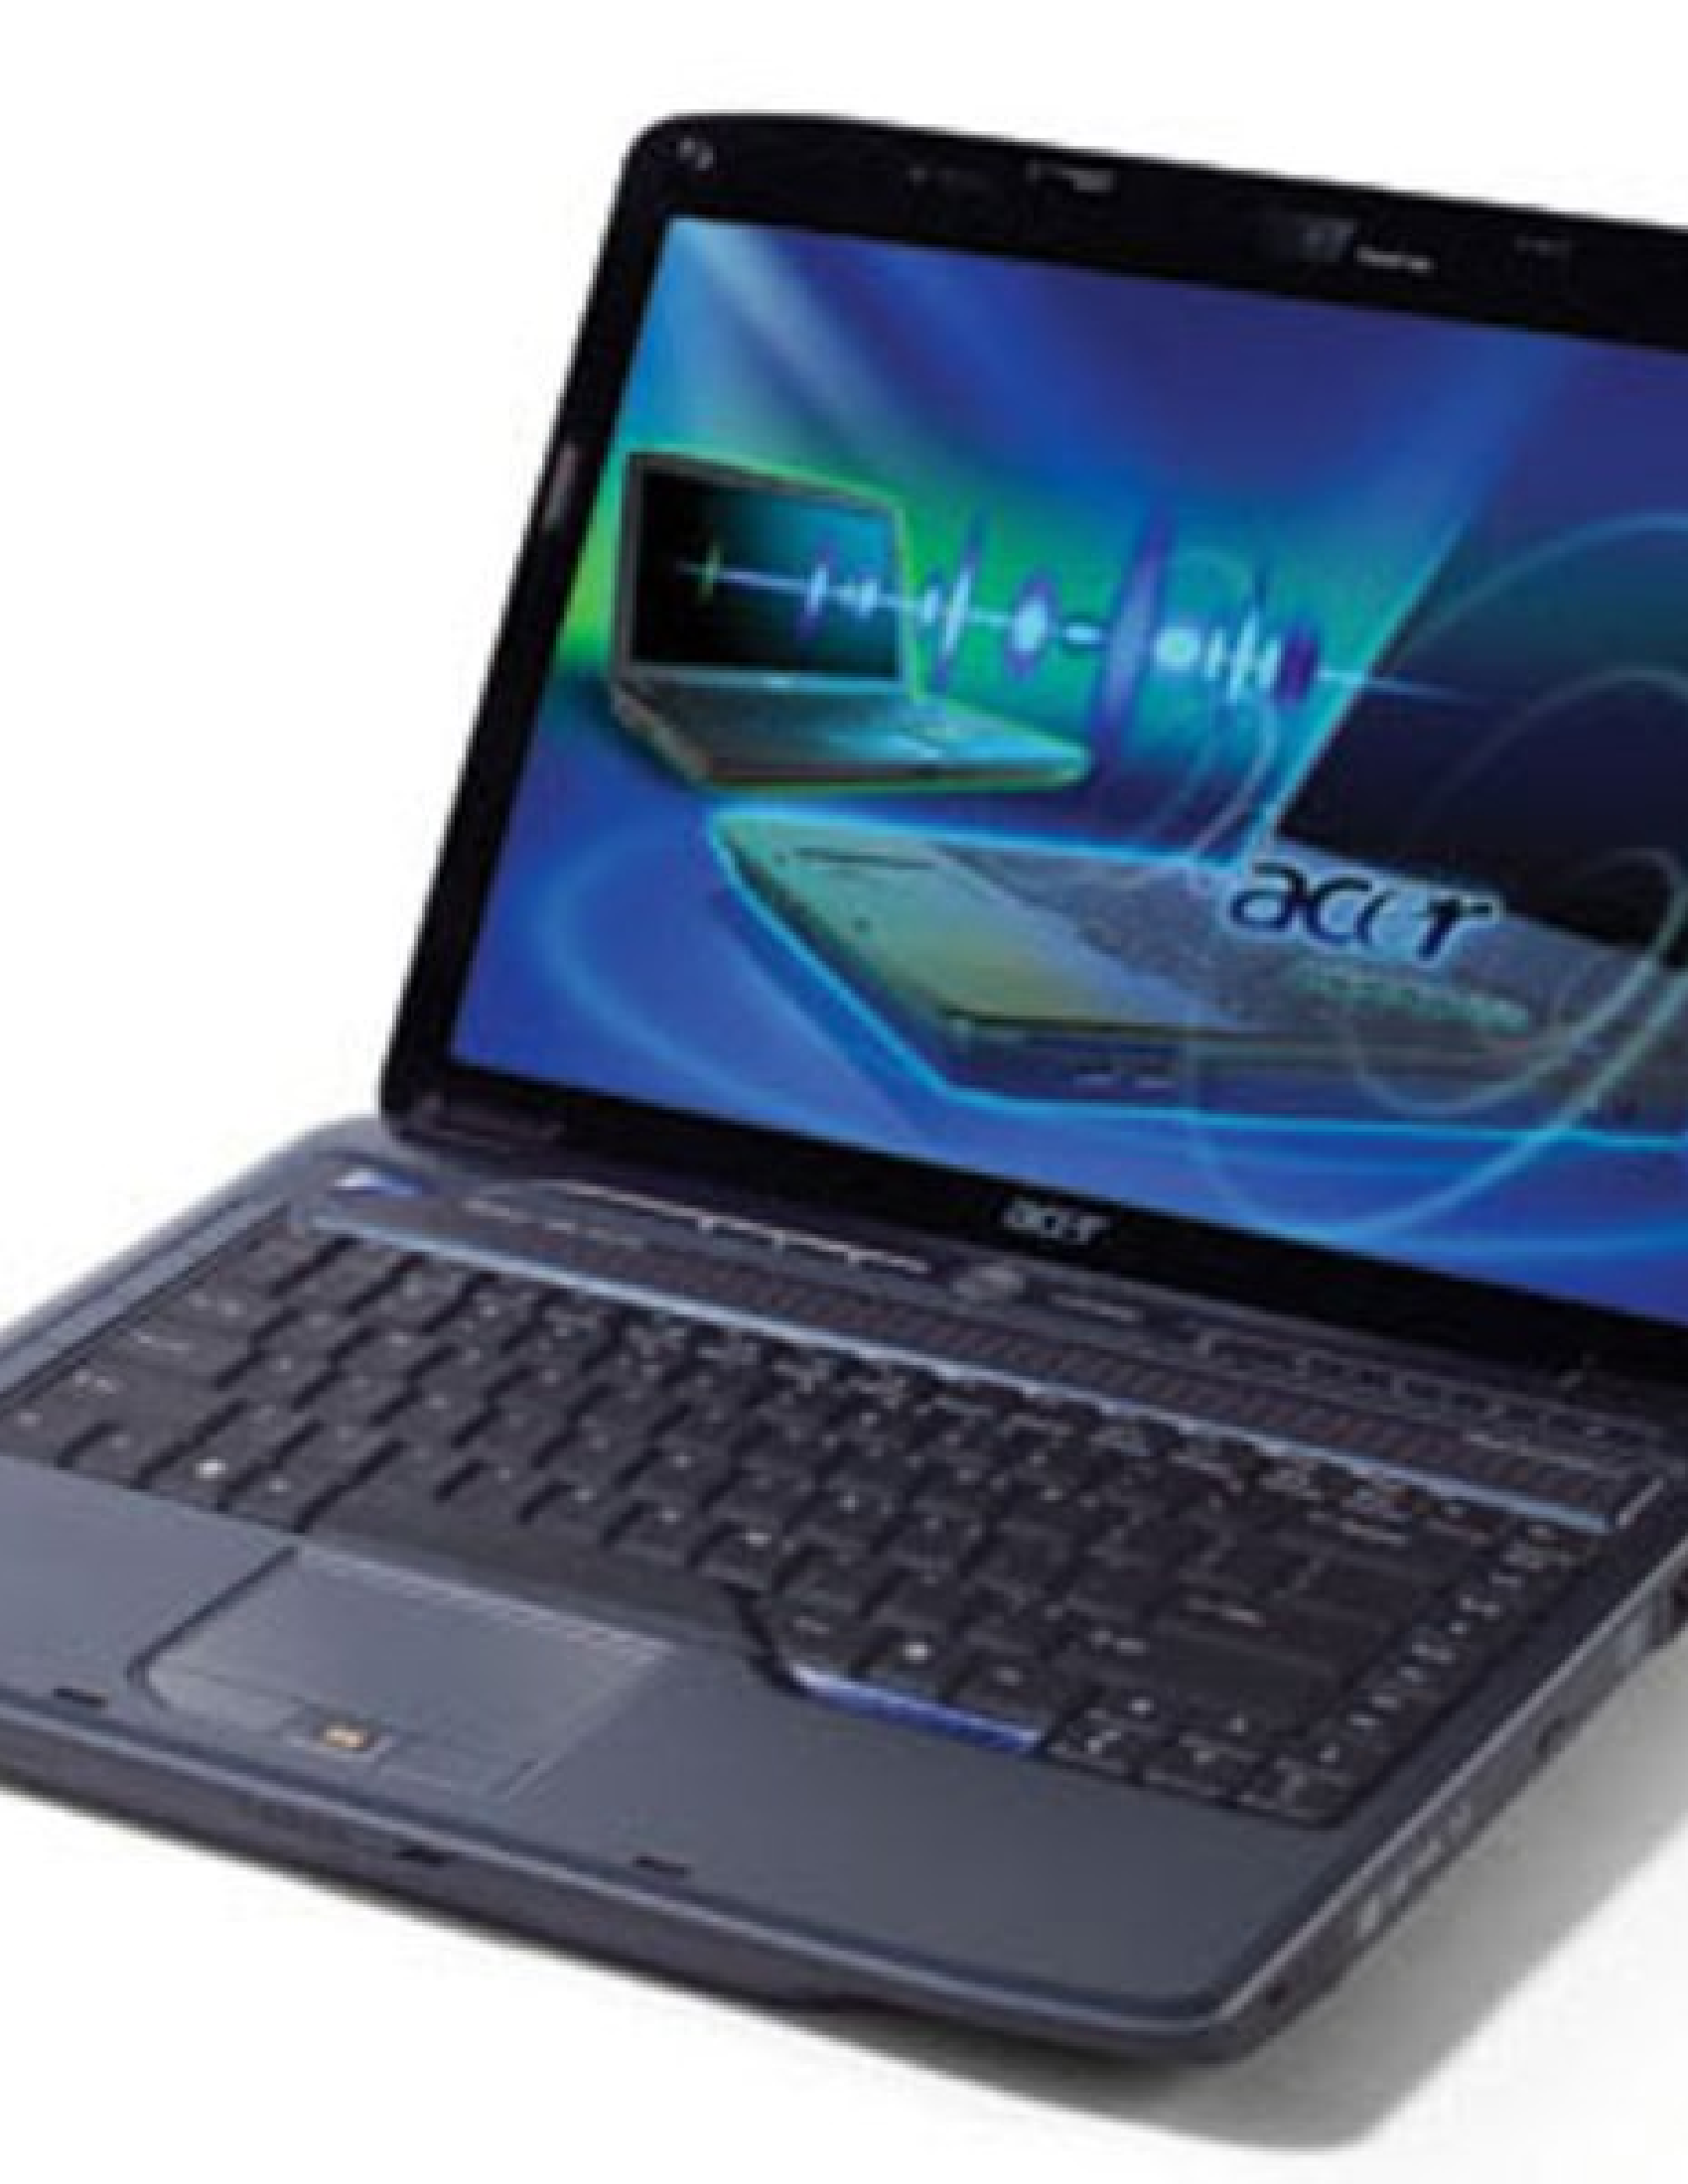 Acer 7730 Aspire Series Laptop manual